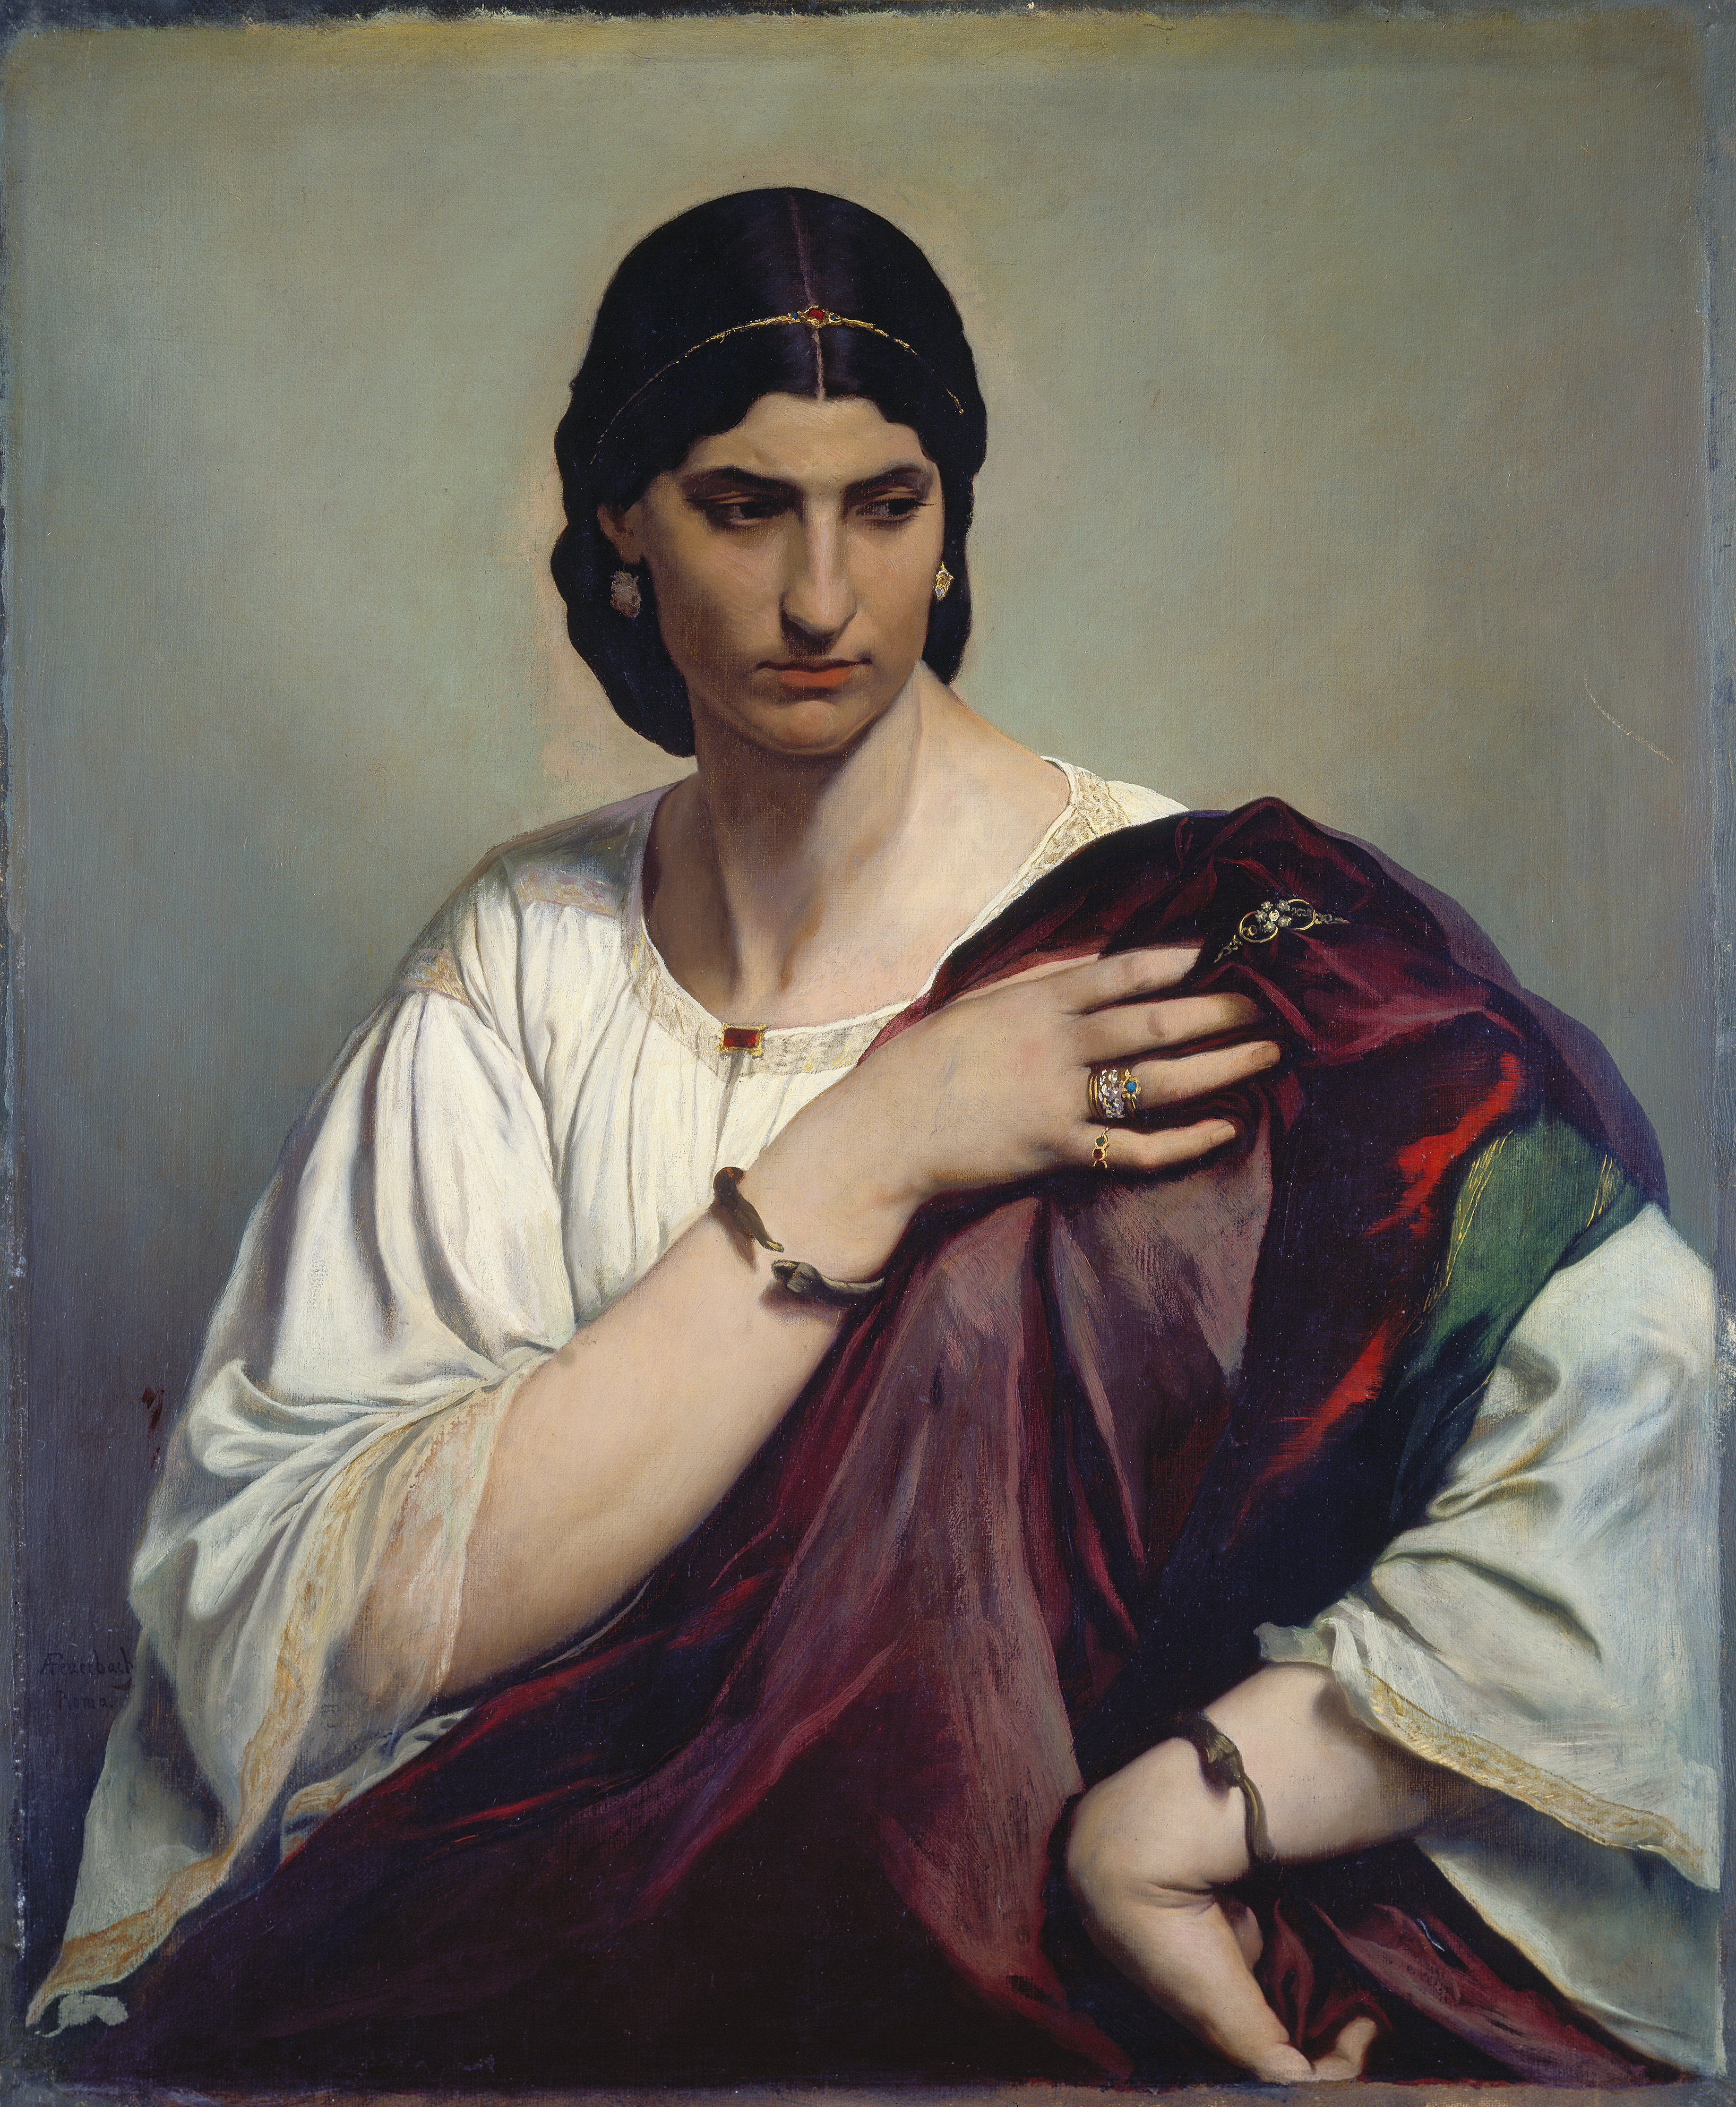 Lucrezia Borgia; Portrait of a Roman woman in a white tunic and red cloak, ca 1862-1866, Anselm Feuerback, Staedel Museum